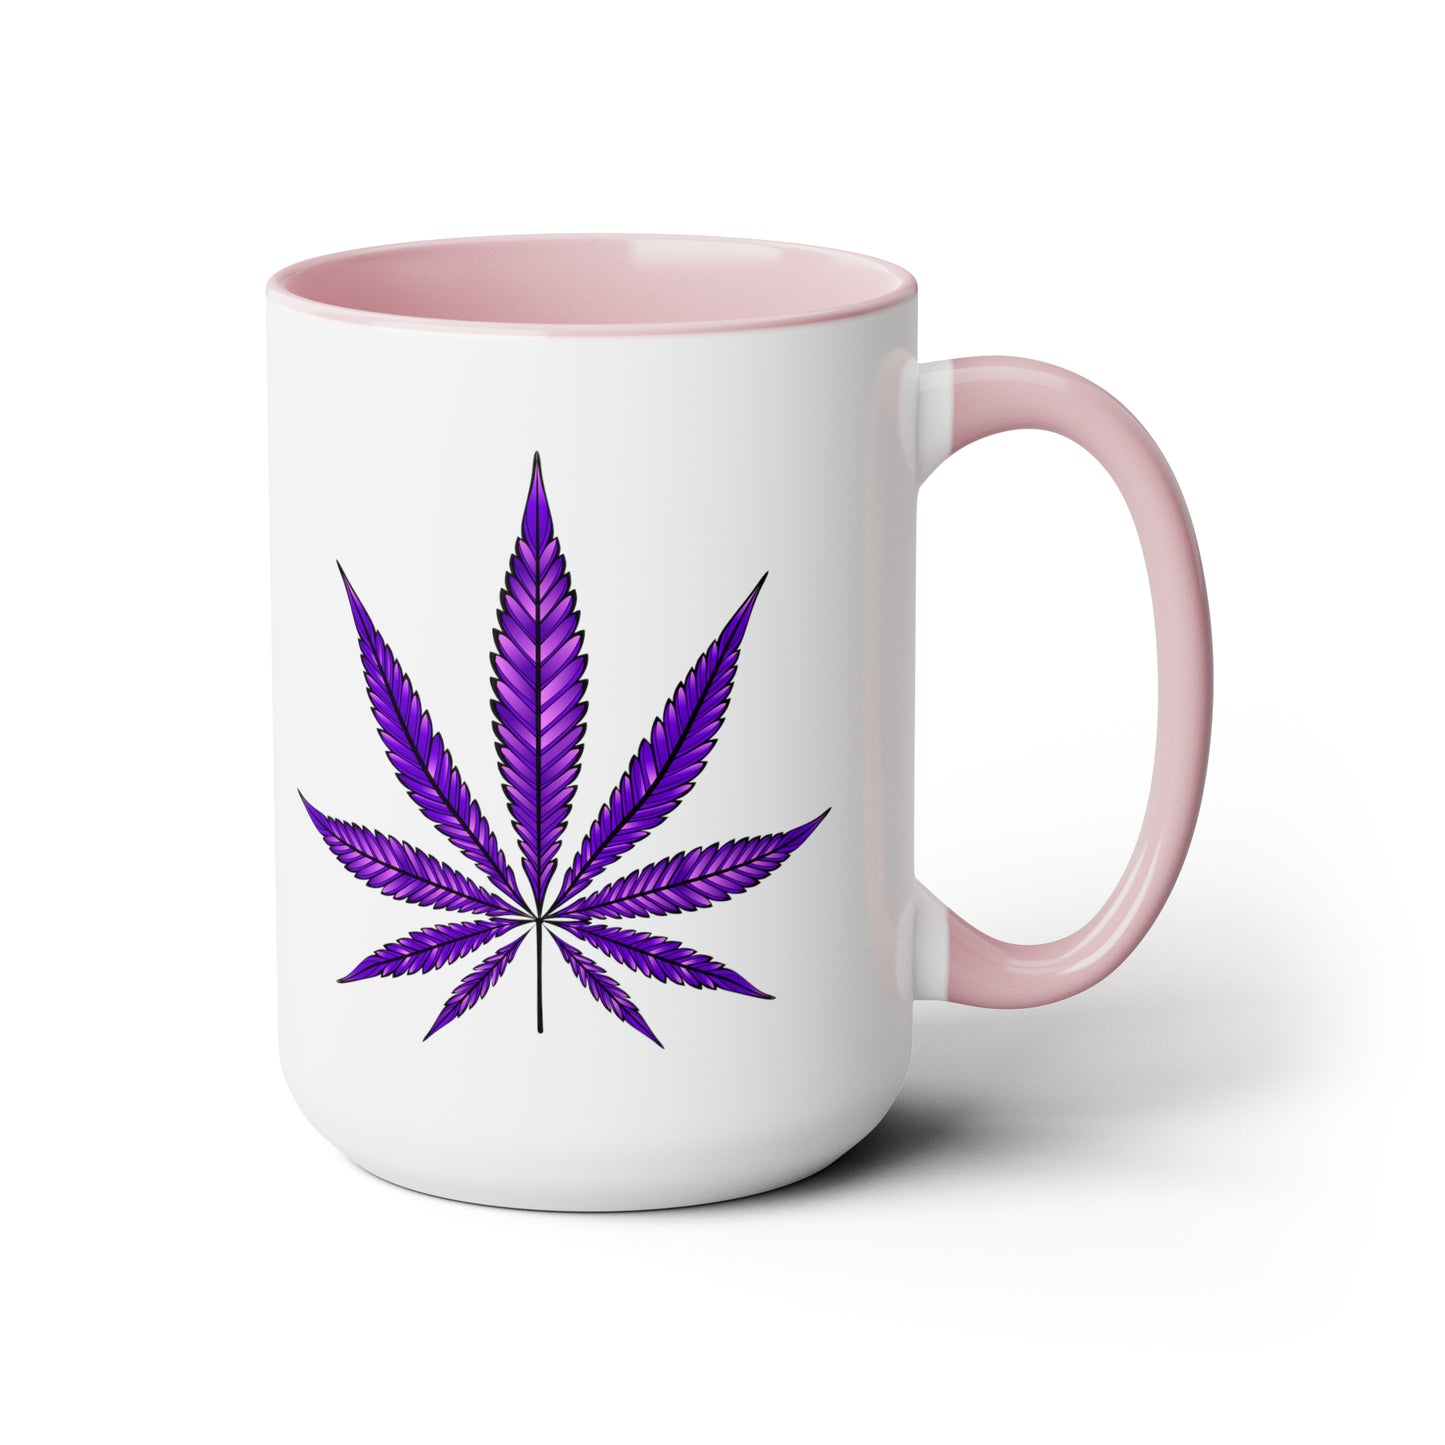 Sentence with product name: Purple Haze Marijuana Coffee Mug with a pink handle and interior, featuring a large Purple Haze marijuana leaf design on the side.